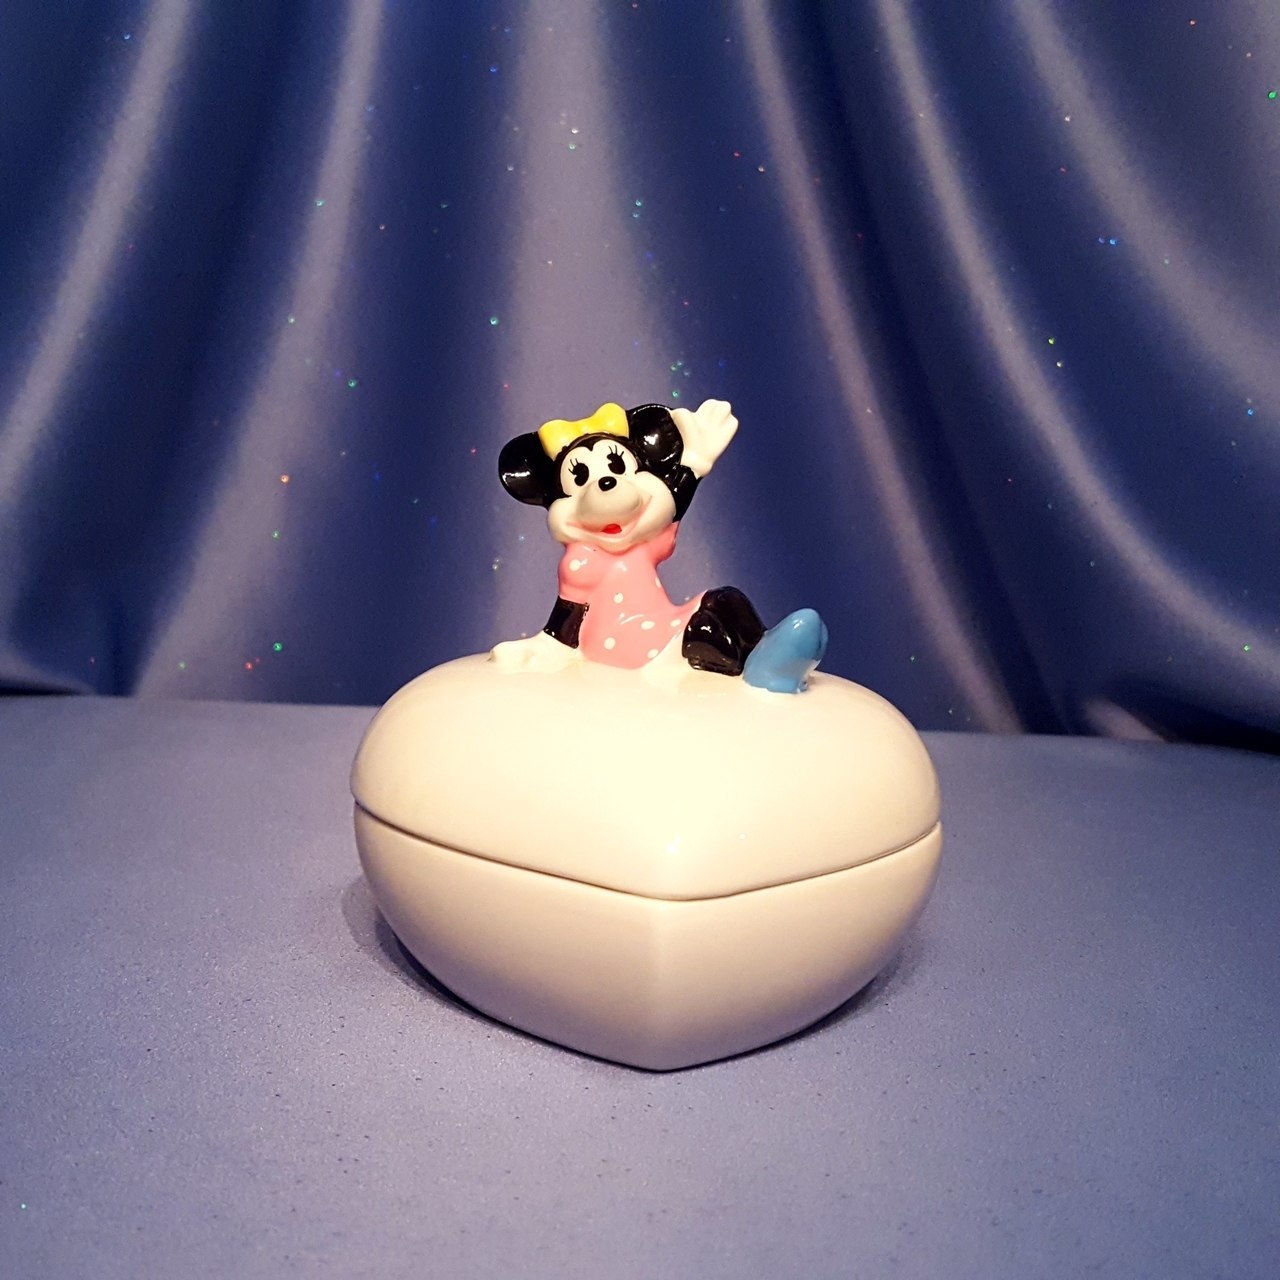 Disney Minnie Mouse Treasure Box. - $12.00